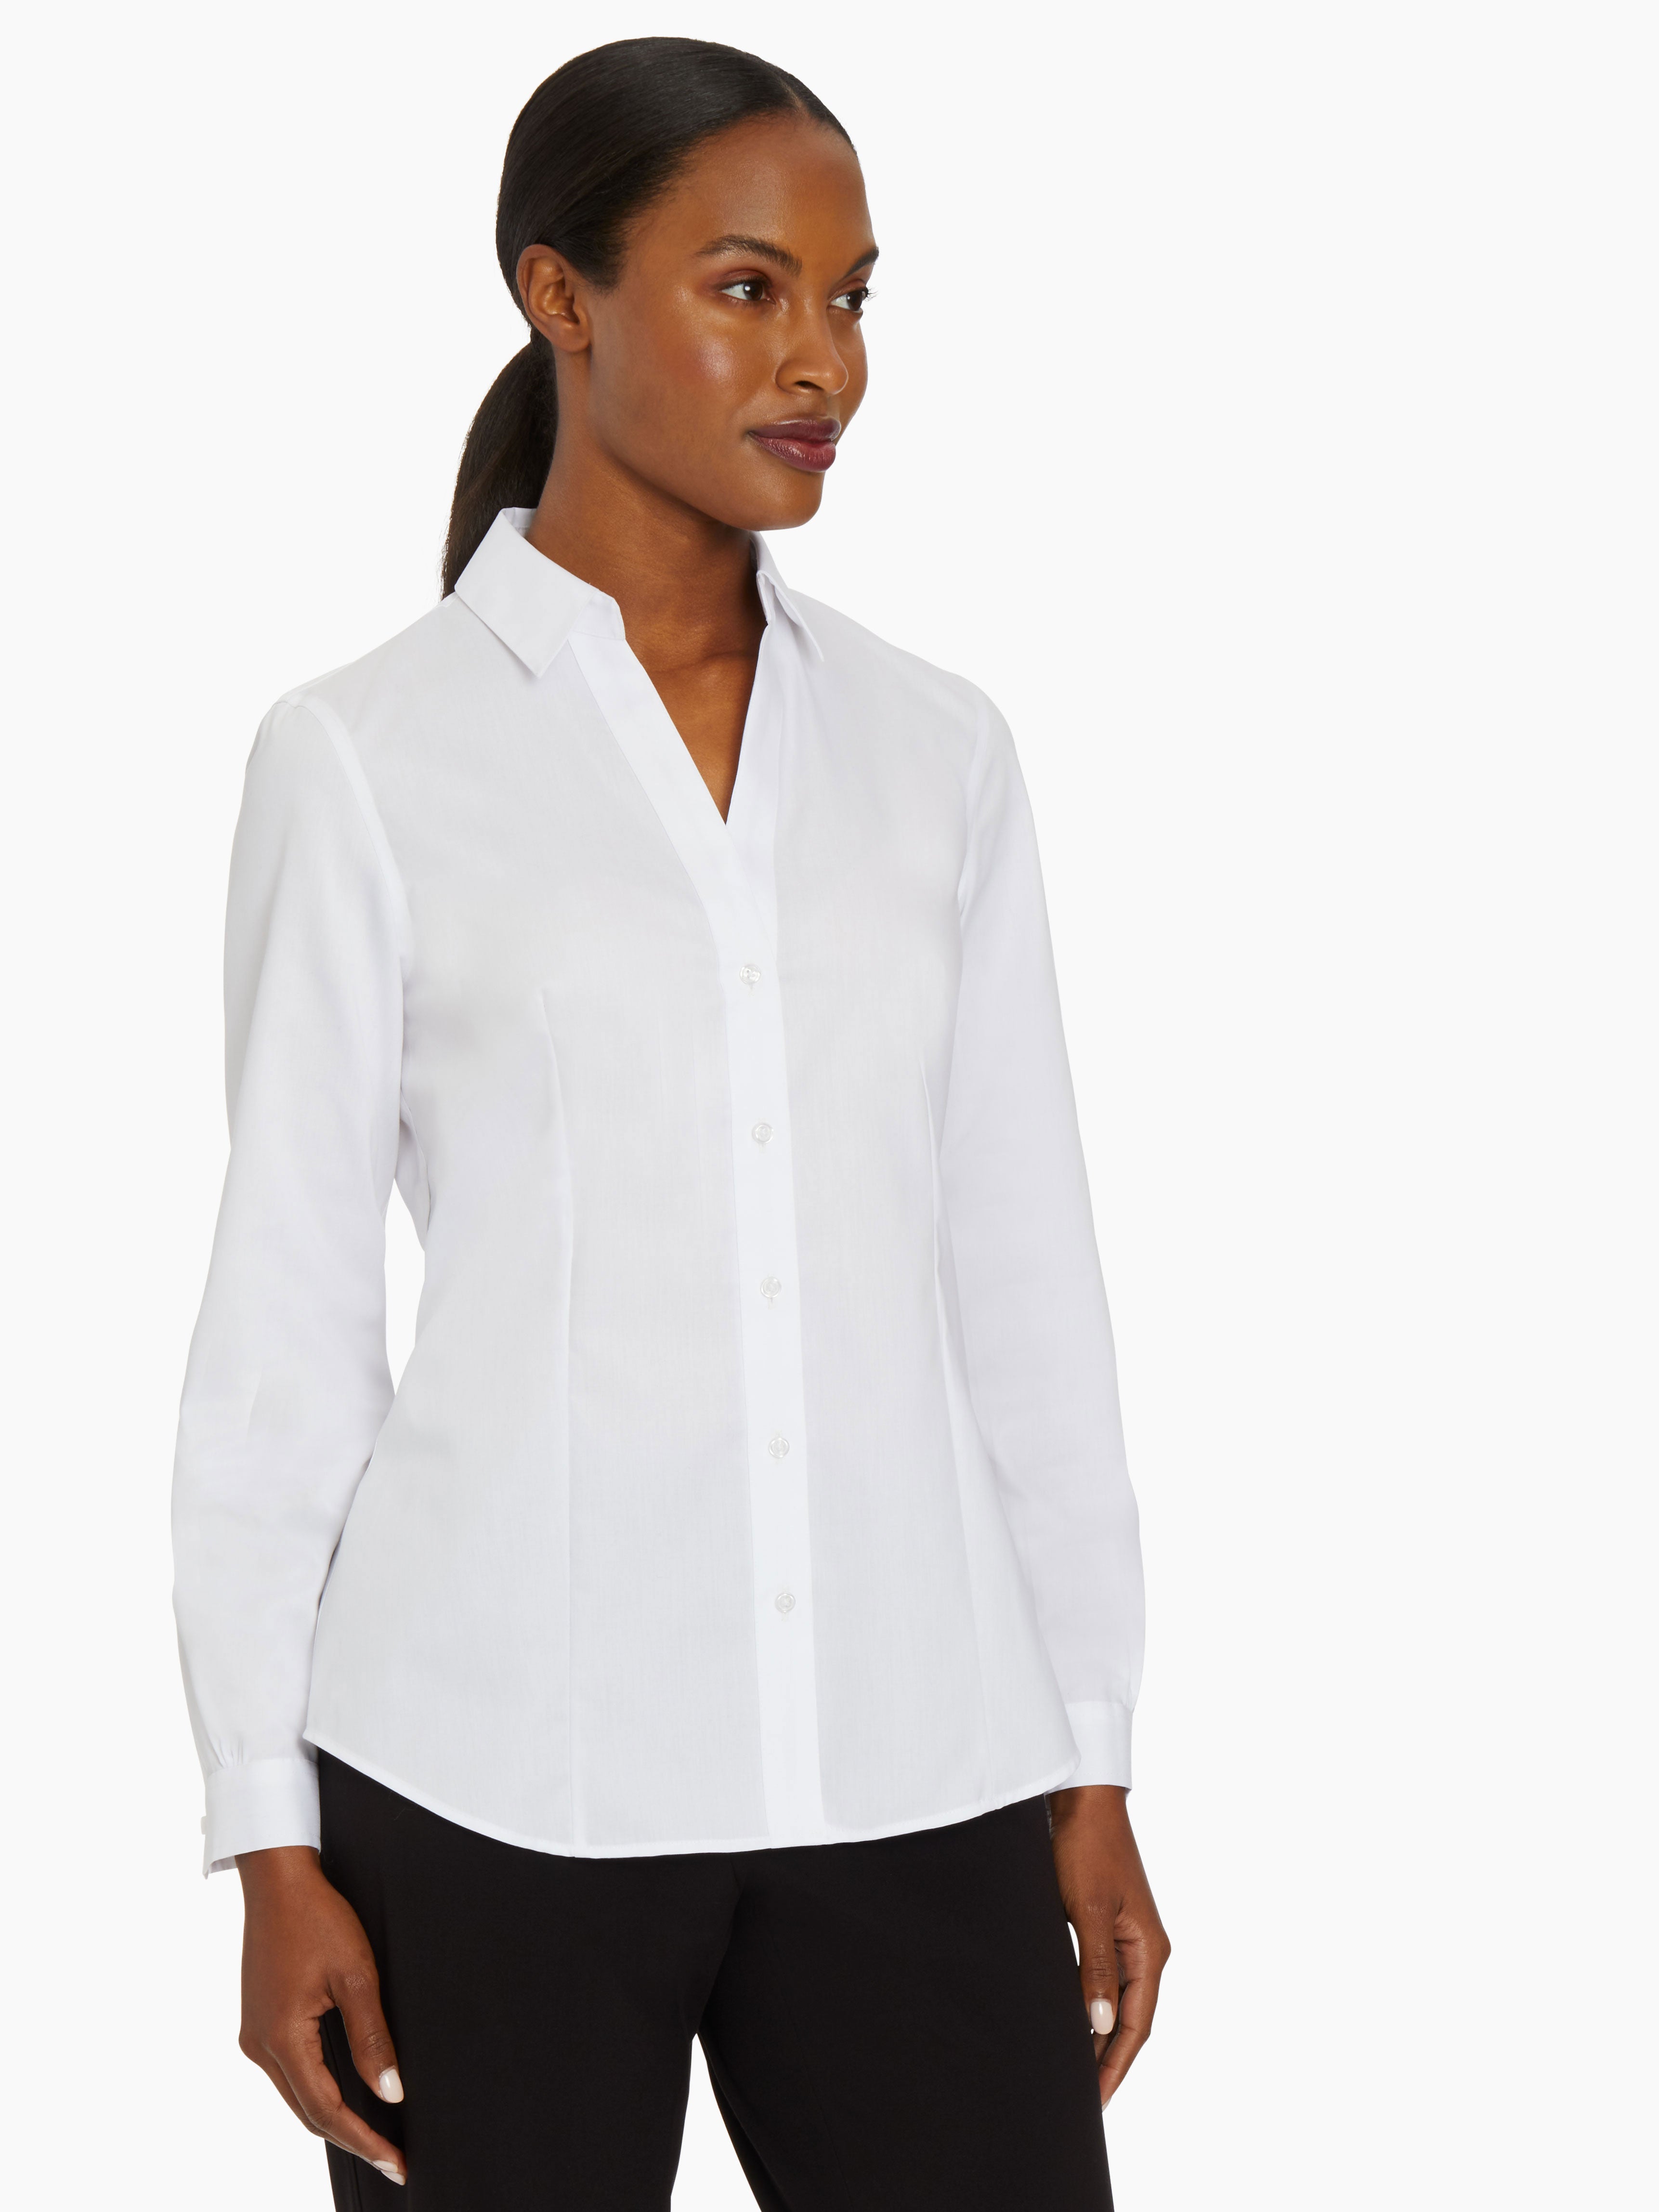 White Easy-Care Shirt - Button Front Shirt | Jones New York